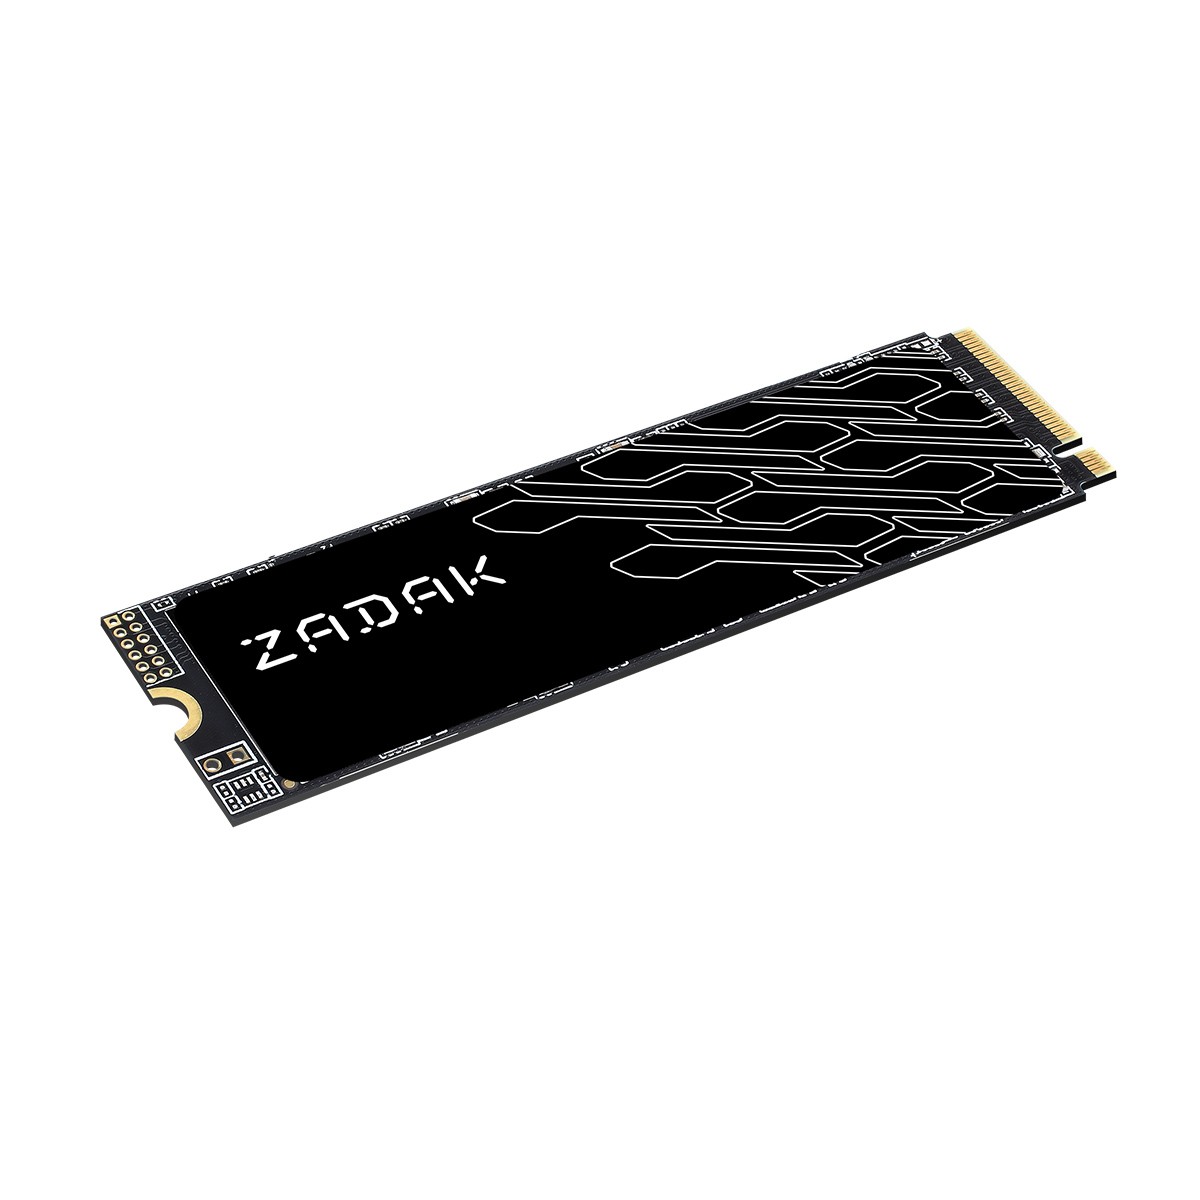 SSD Zadak TWSG3 512GB, PCIe Gen 3x4 M.2 NVMe, Leitura 3500MBs e Gravação 3200MBs, ZS512GTWSG3-1